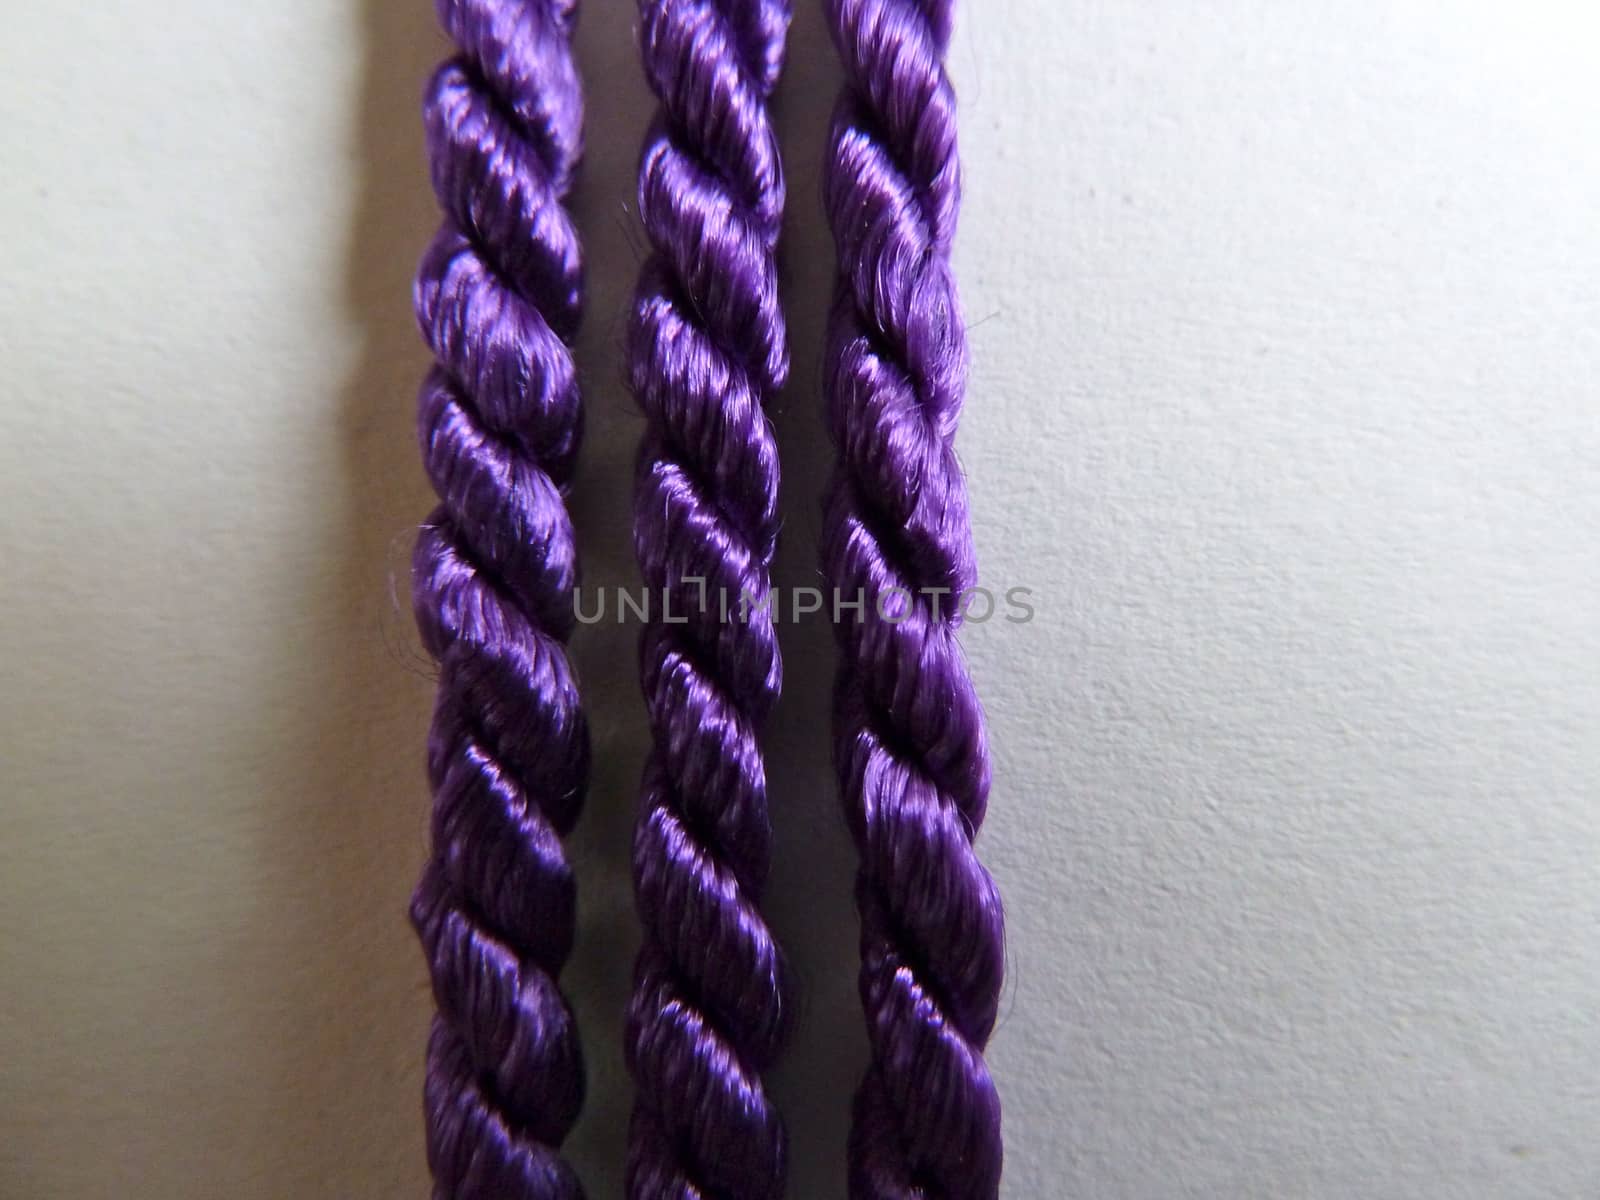 Three purple ropes by gazmoi